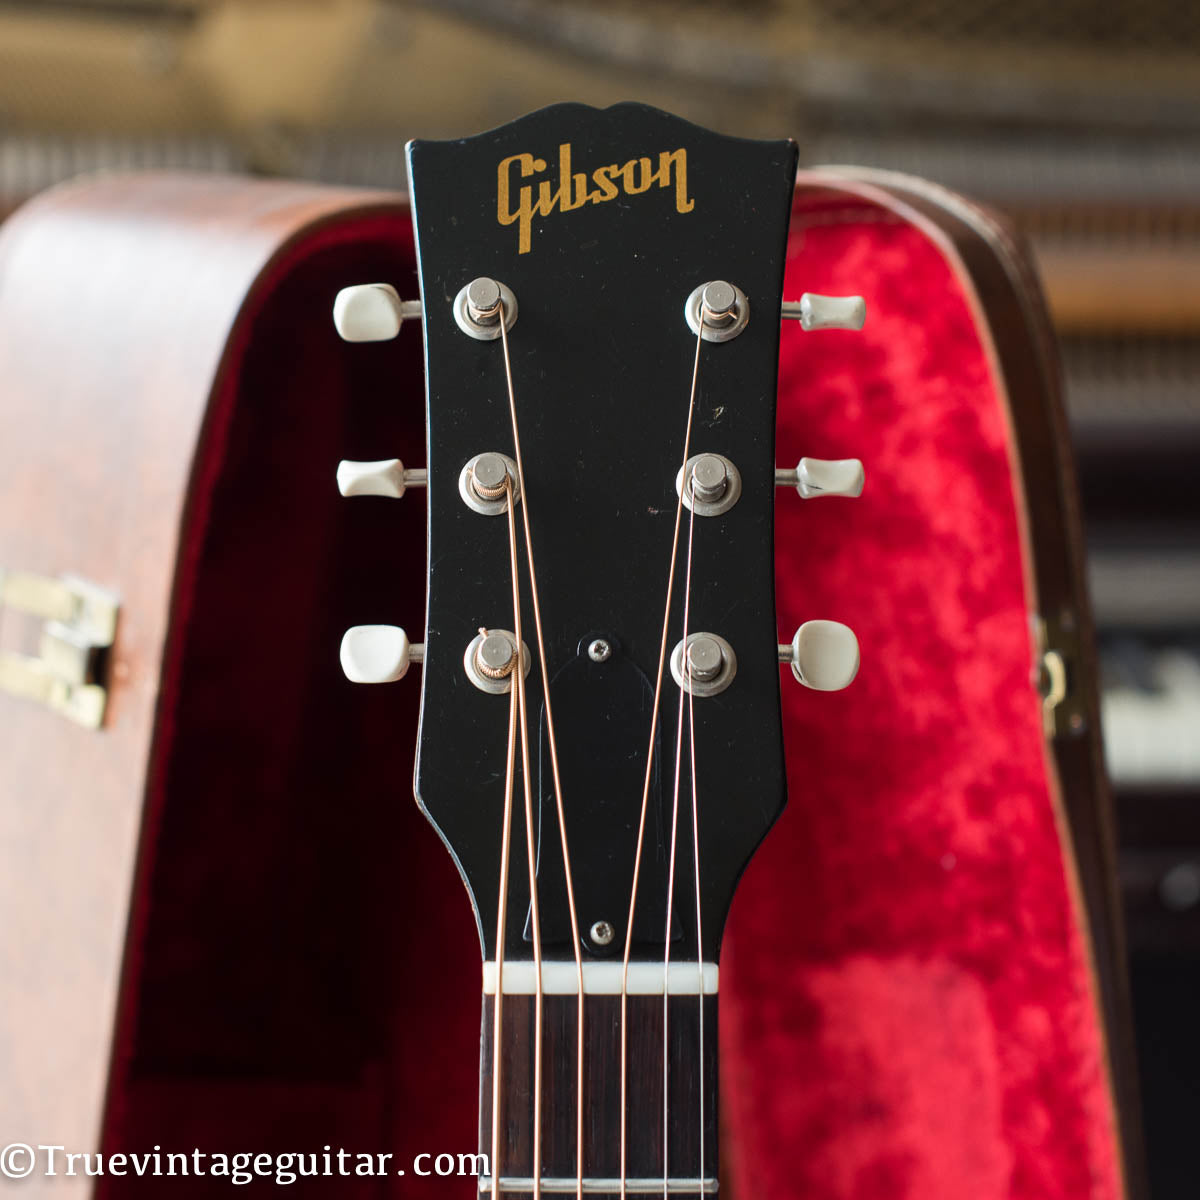 Gibson headstock, 1962 J-50 guitar